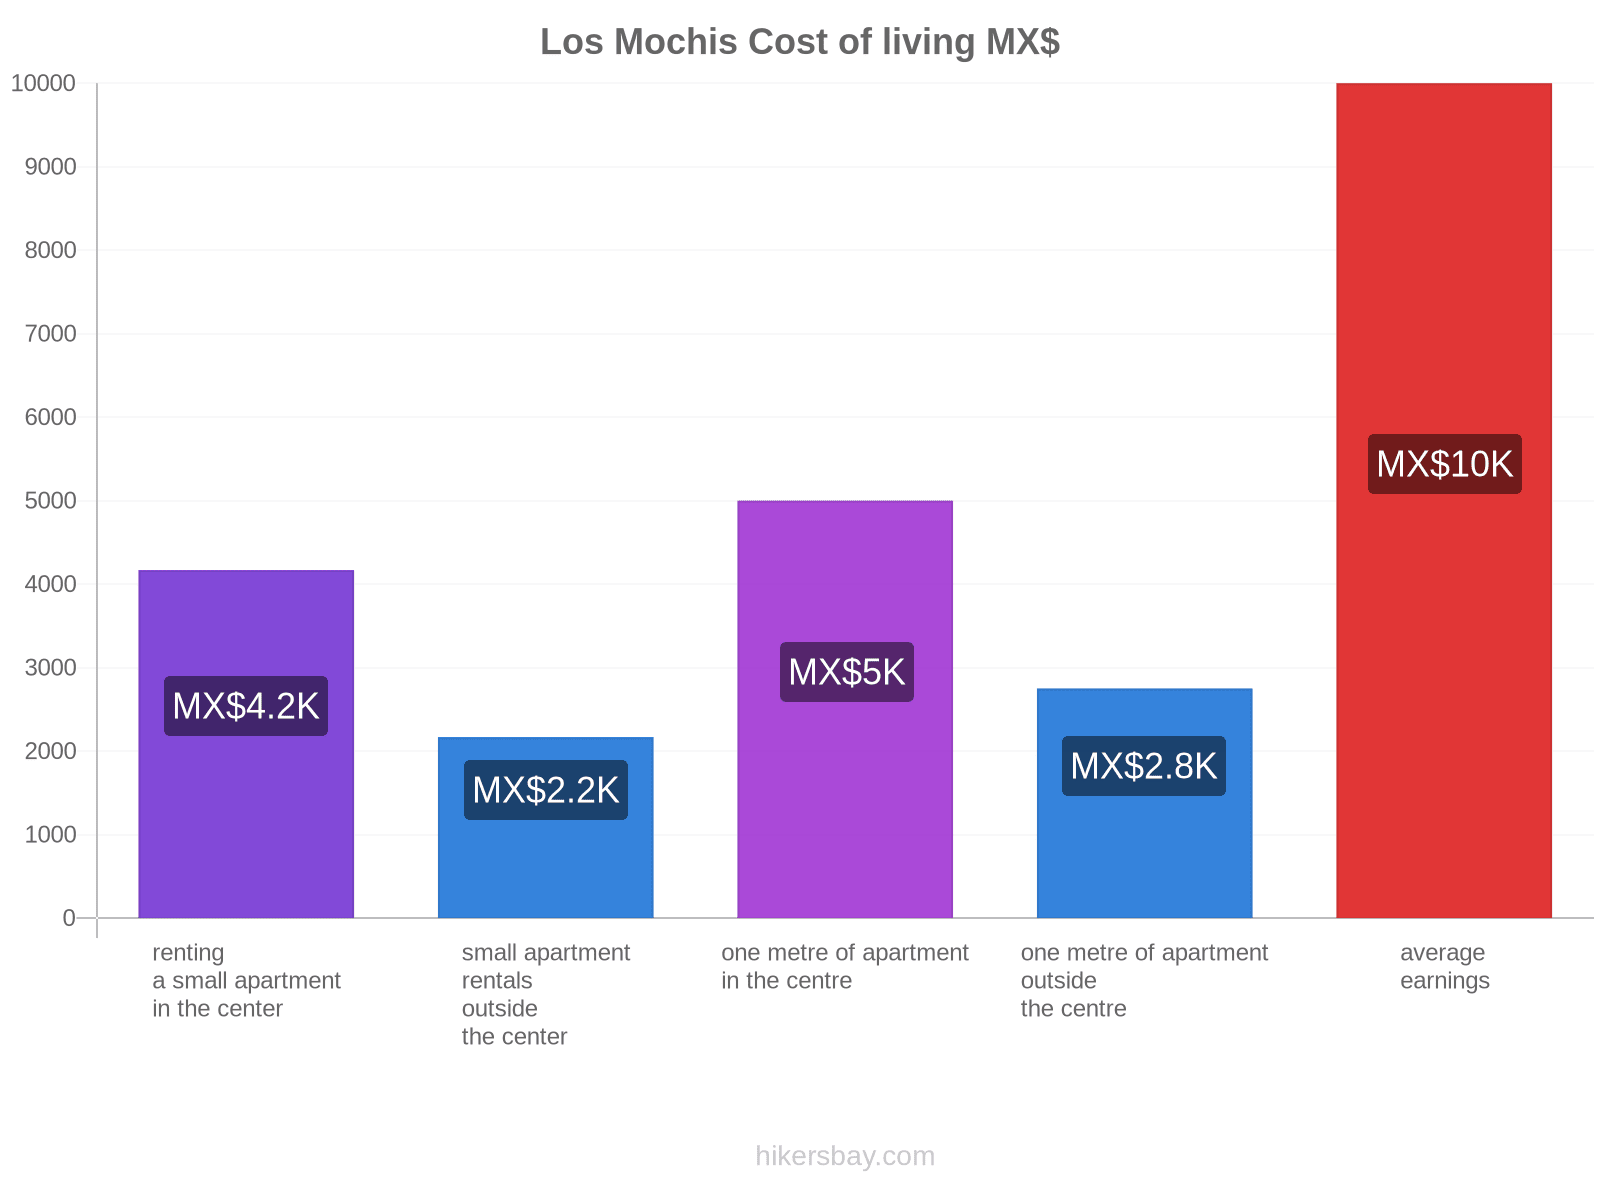 Los Mochis cost of living hikersbay.com